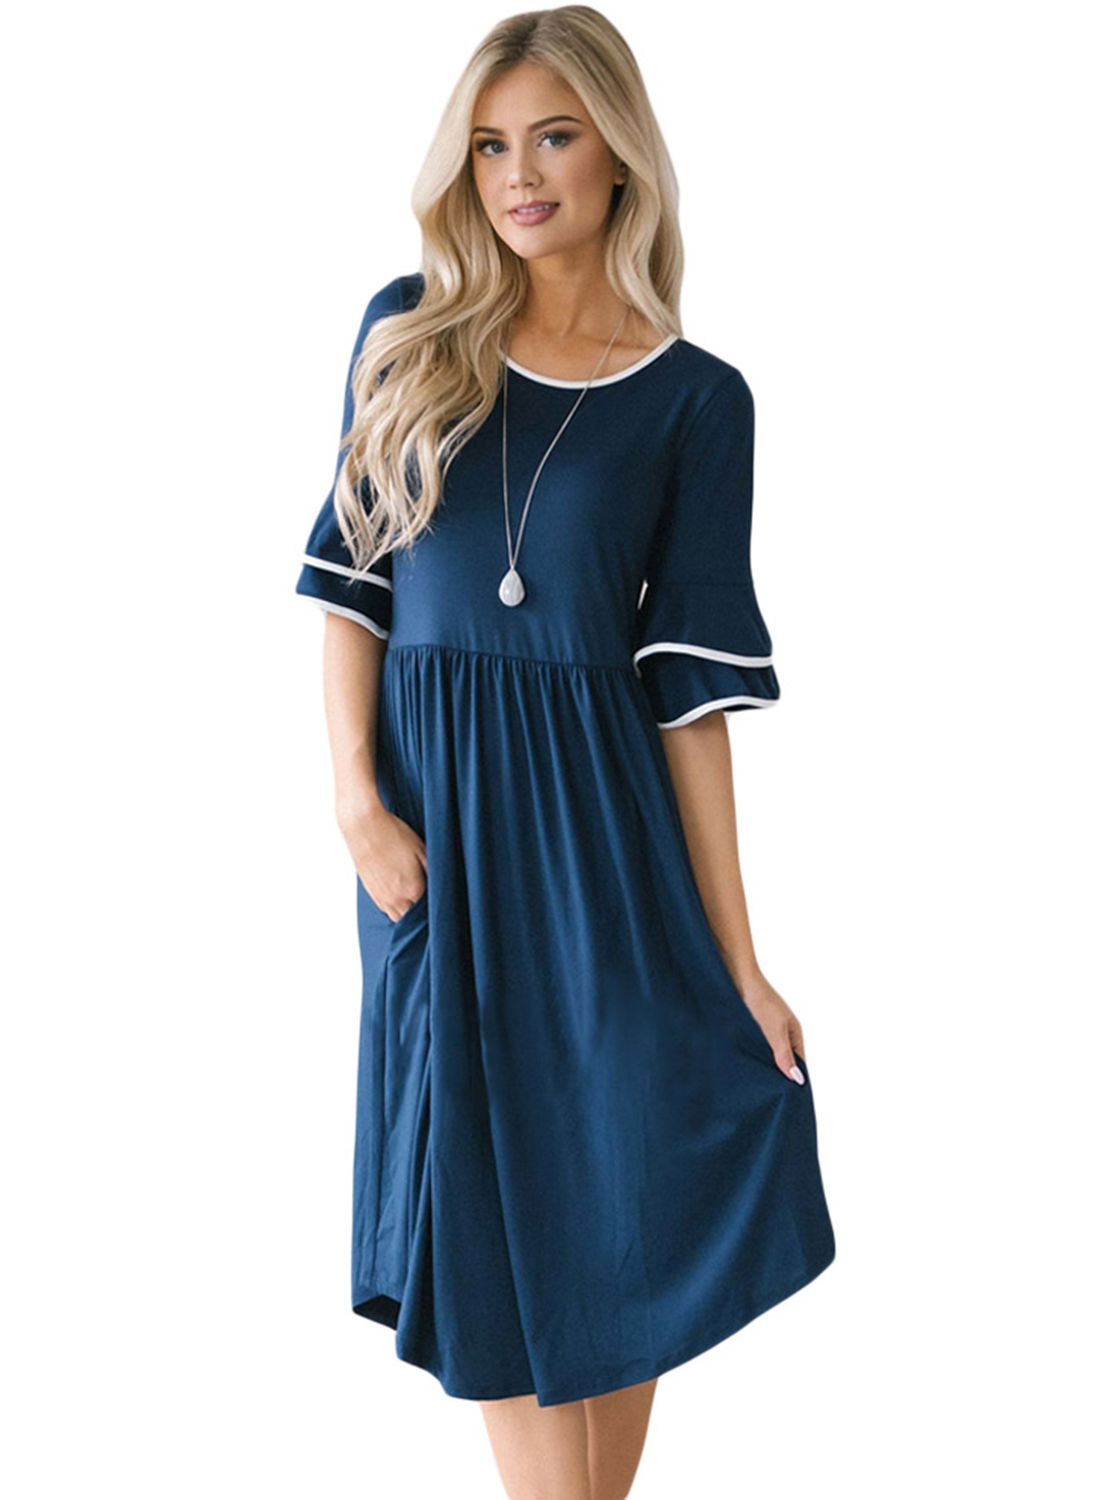 Slate Blue Layered Bell Sleeve Women Dress - STYLESIMO.com